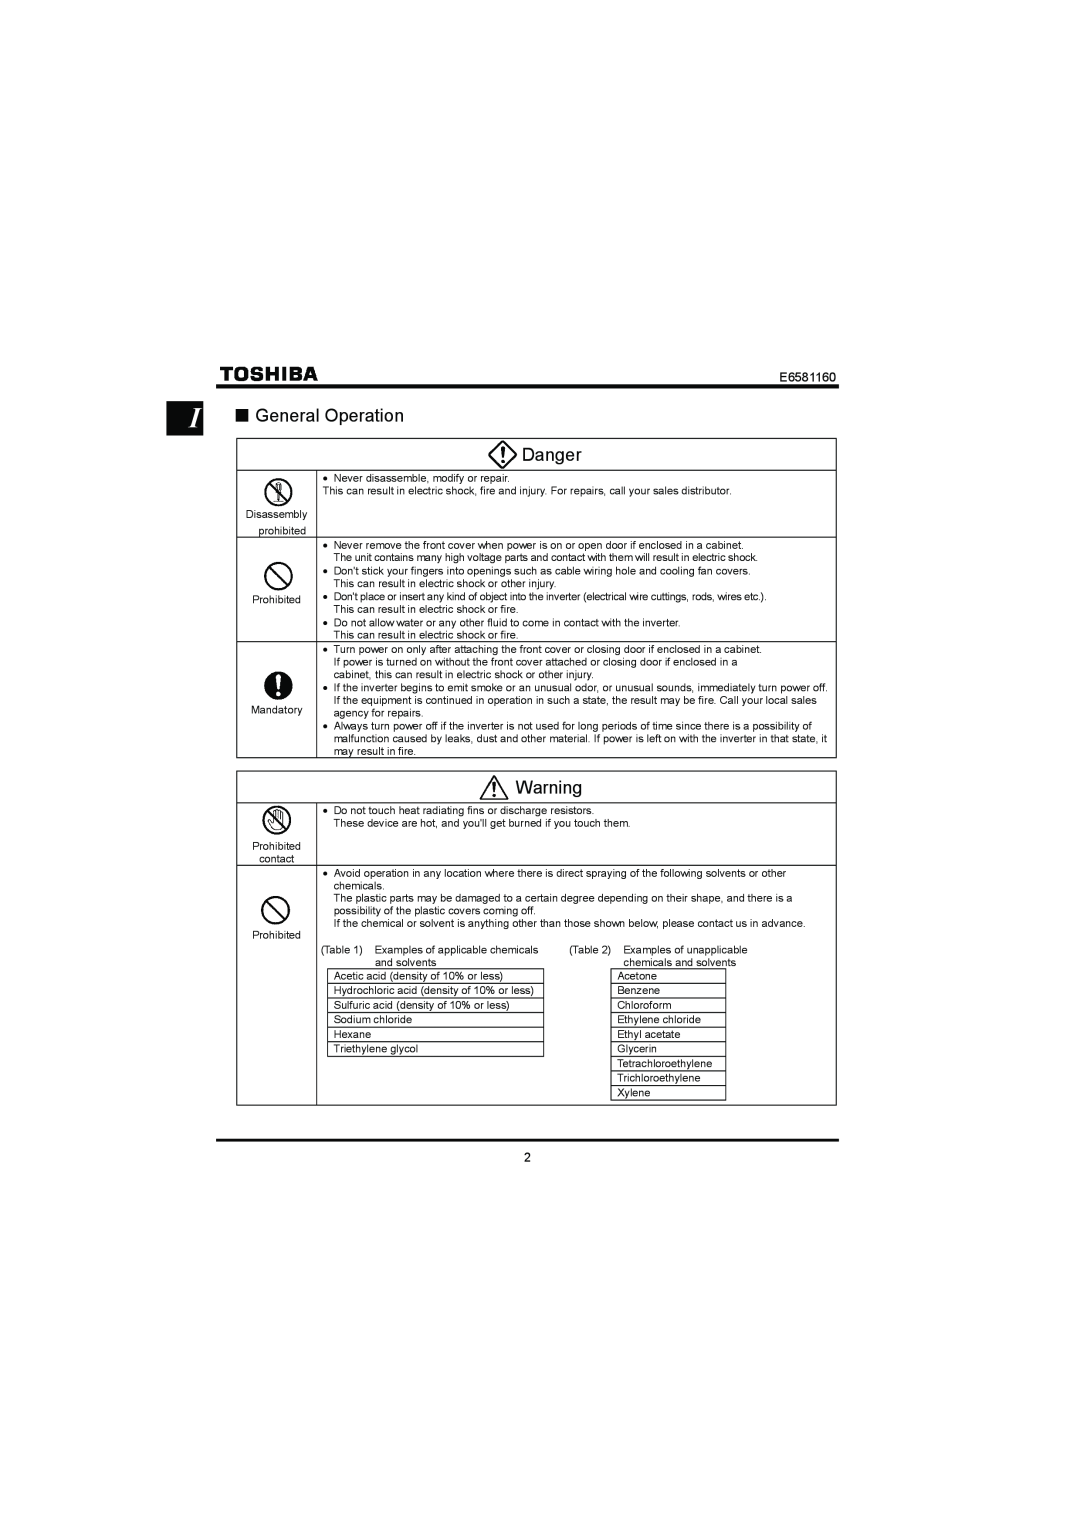 Toshiba VF-S11 manual I Q General Operation Danger, E6581160 